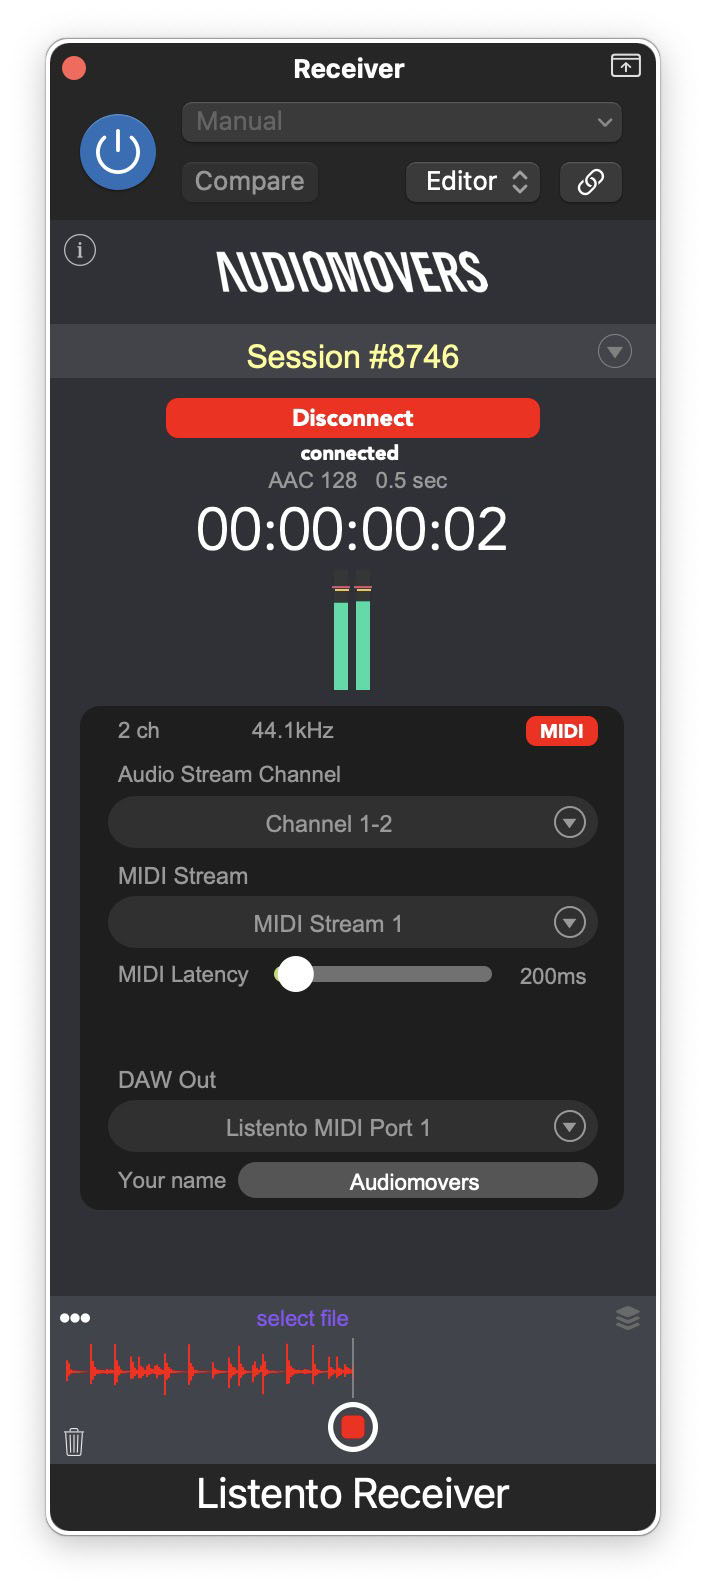 The LISTENTO Receiver Plugin now incorporates MIDI functionality alongside it’s audio capabilities